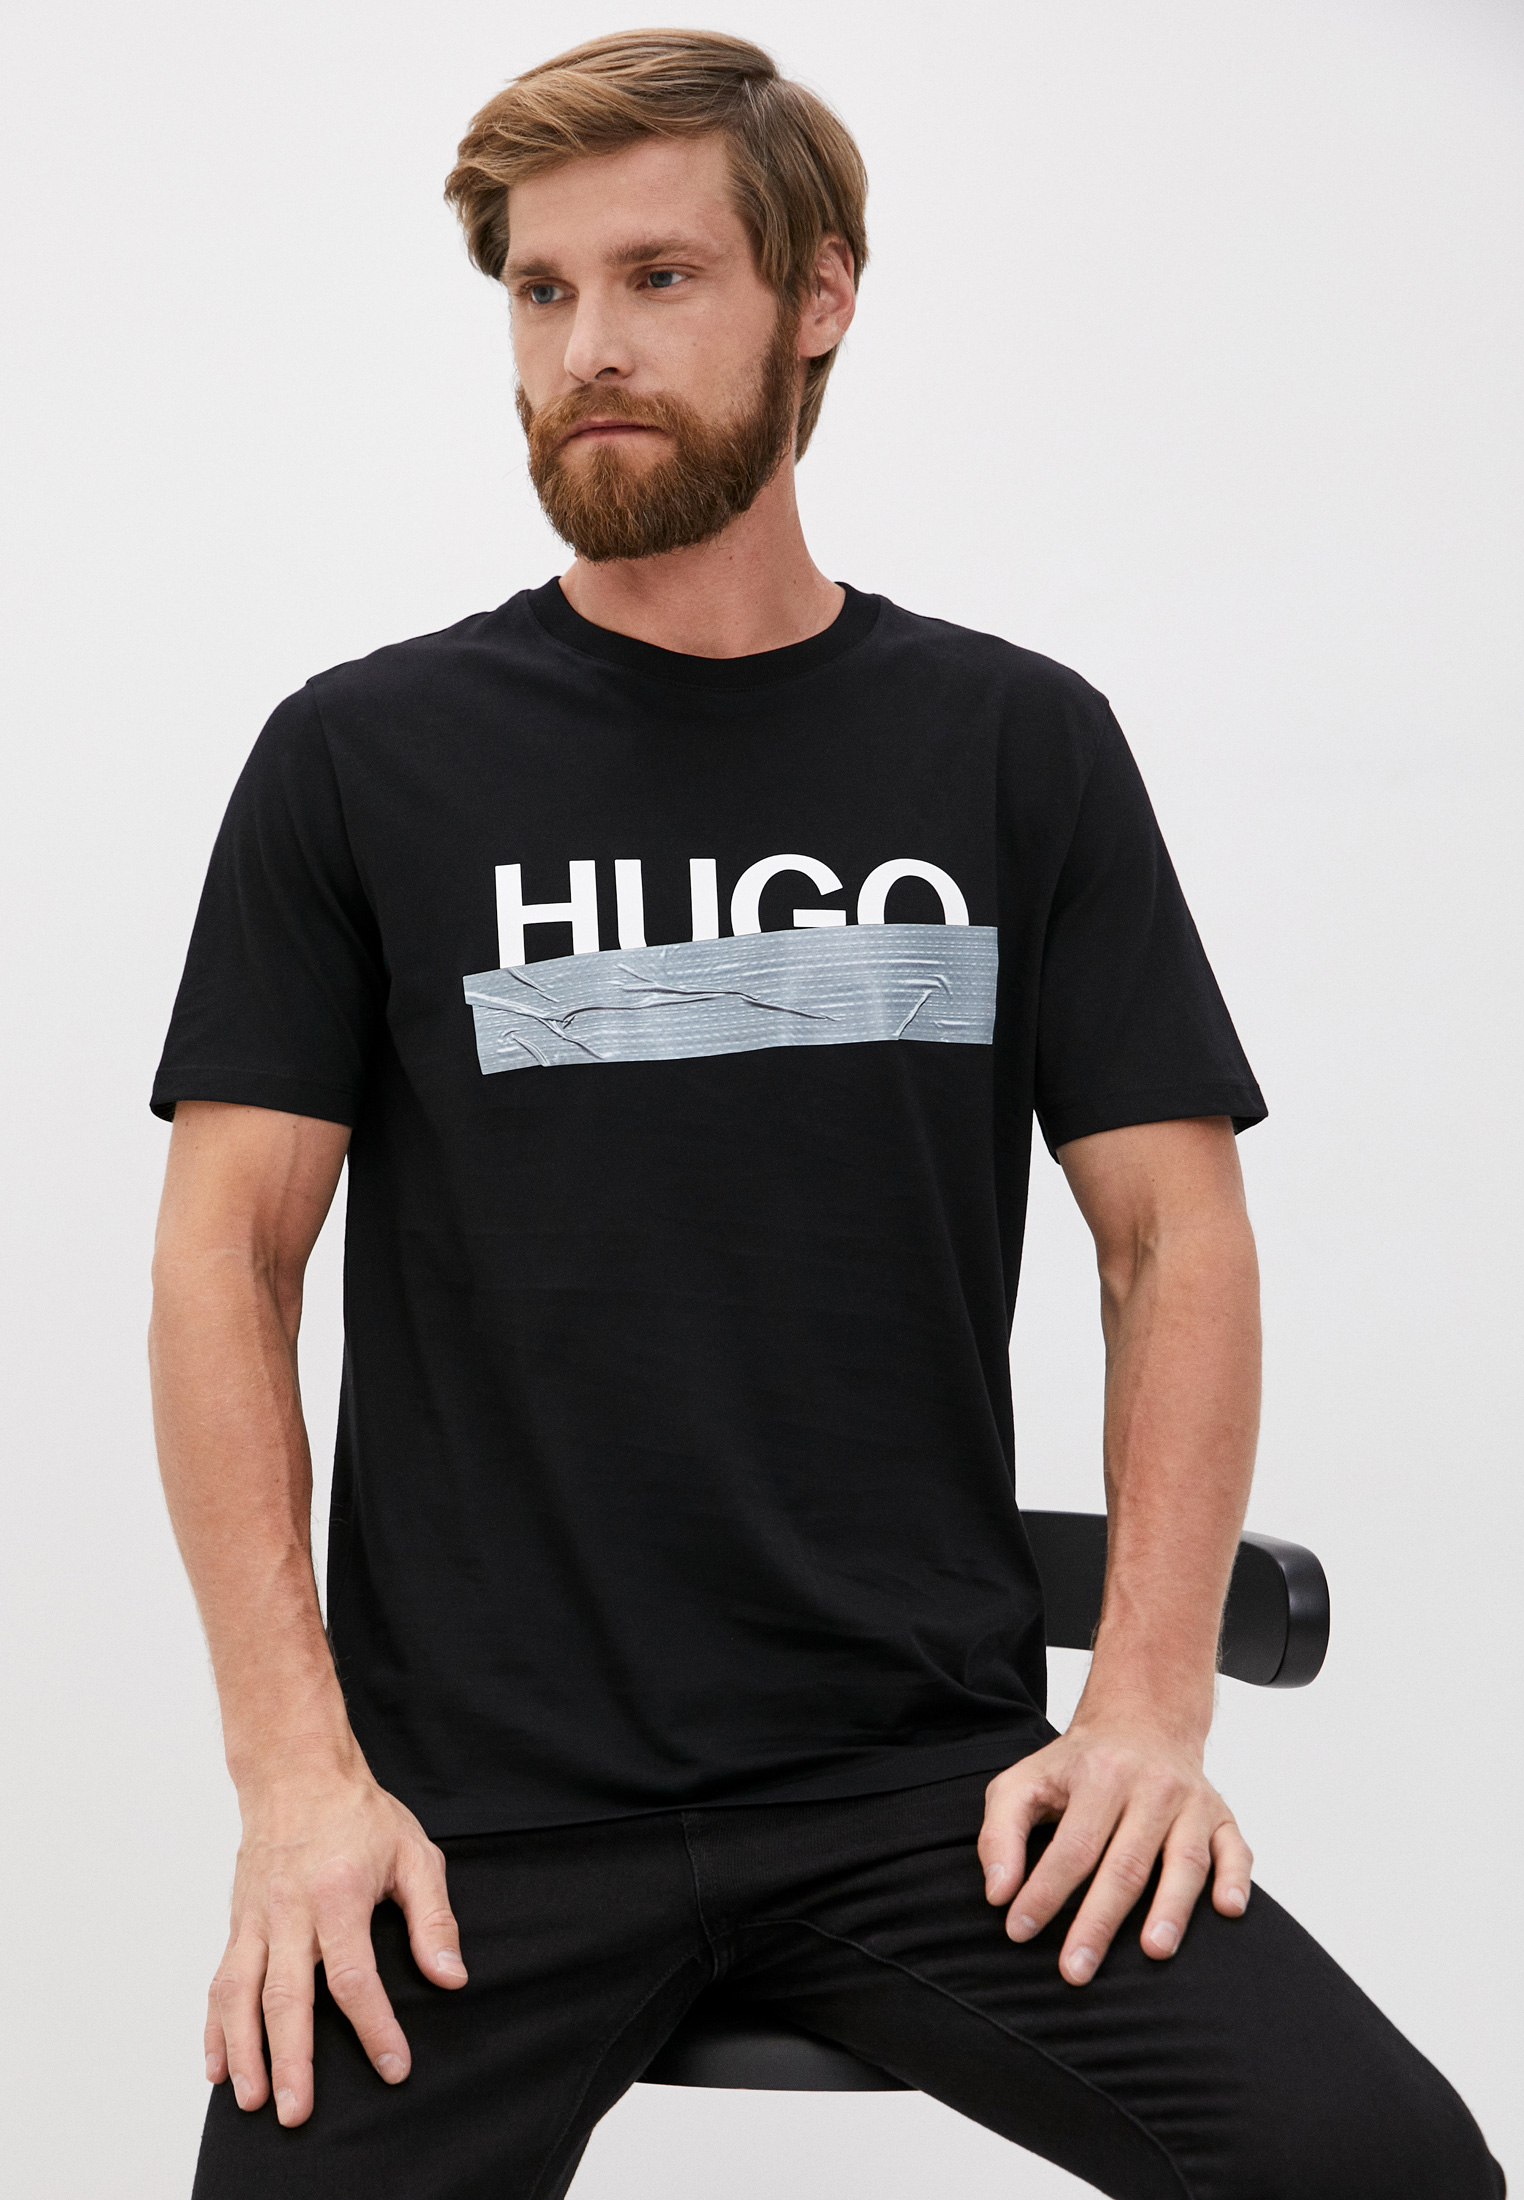 Hugo black